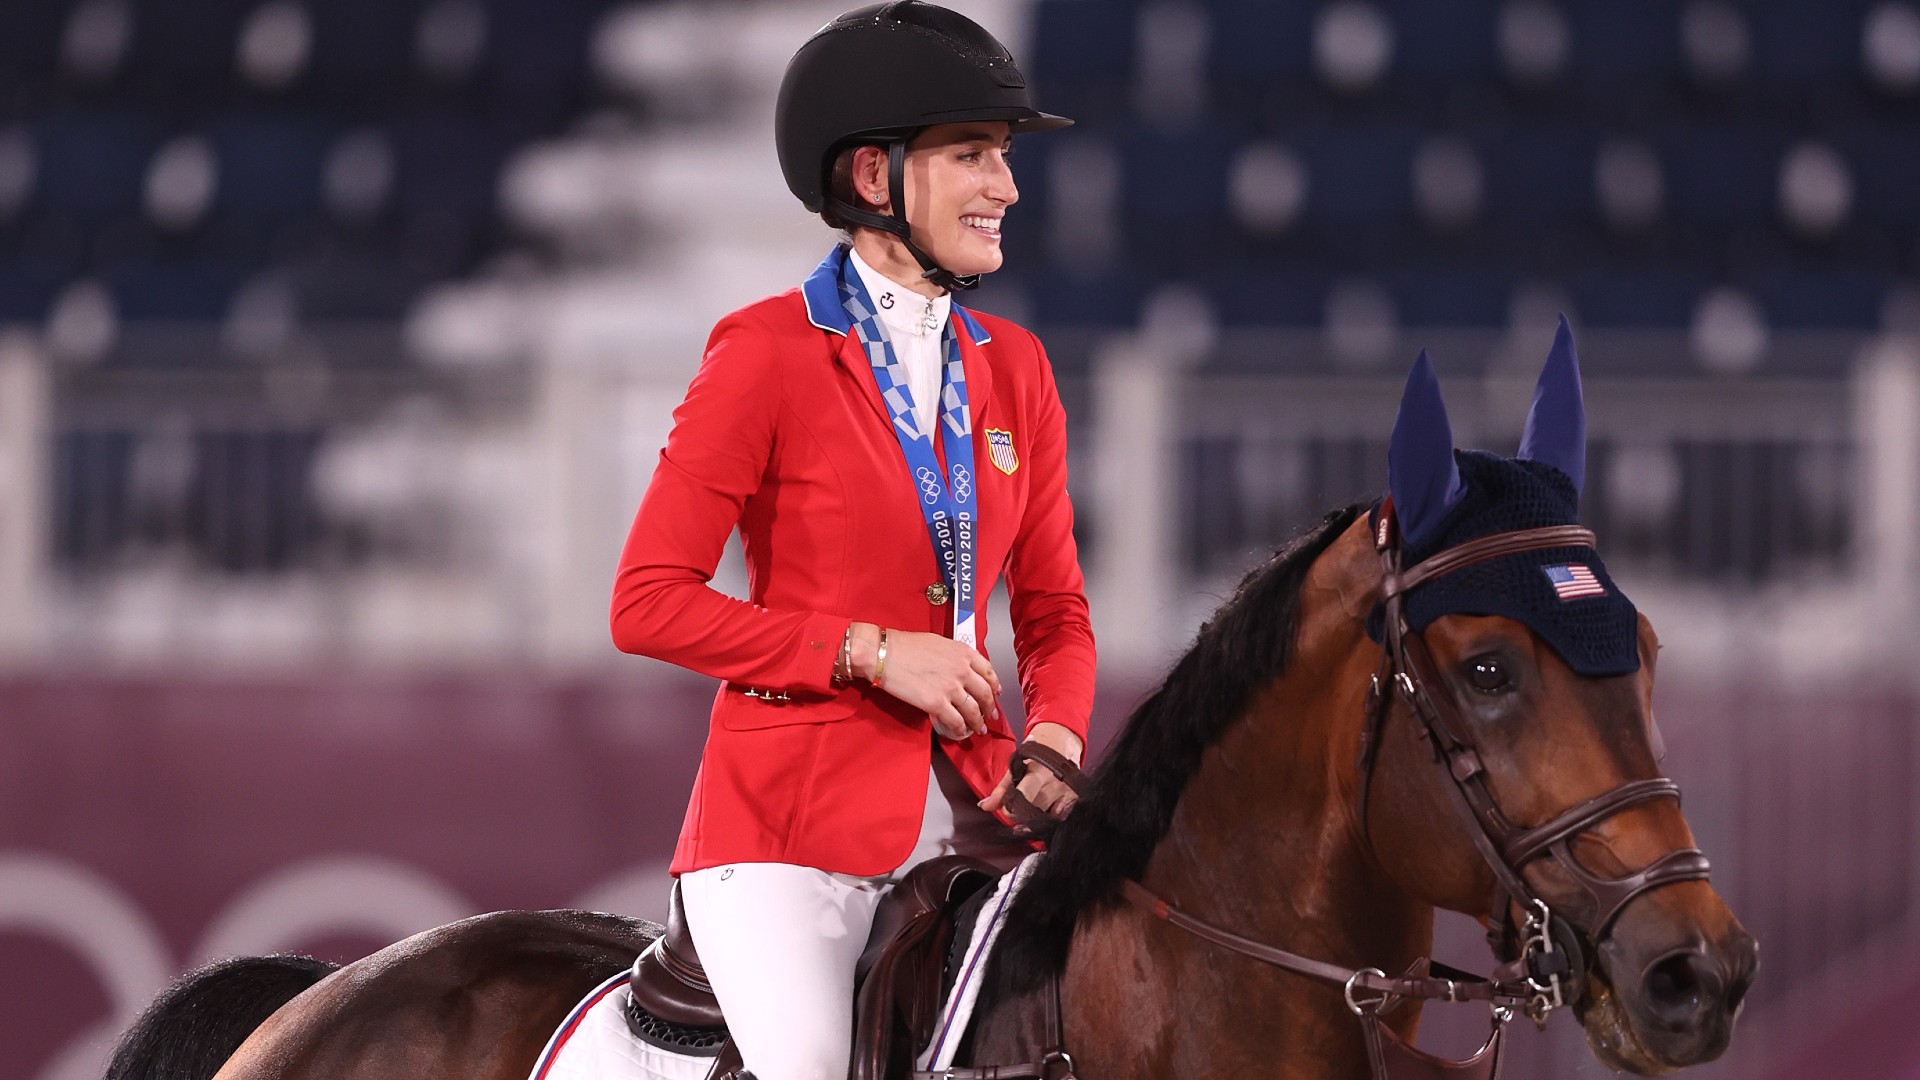 Jessica Springsteen, Bruce Springsteen's daughter, wins equestrian